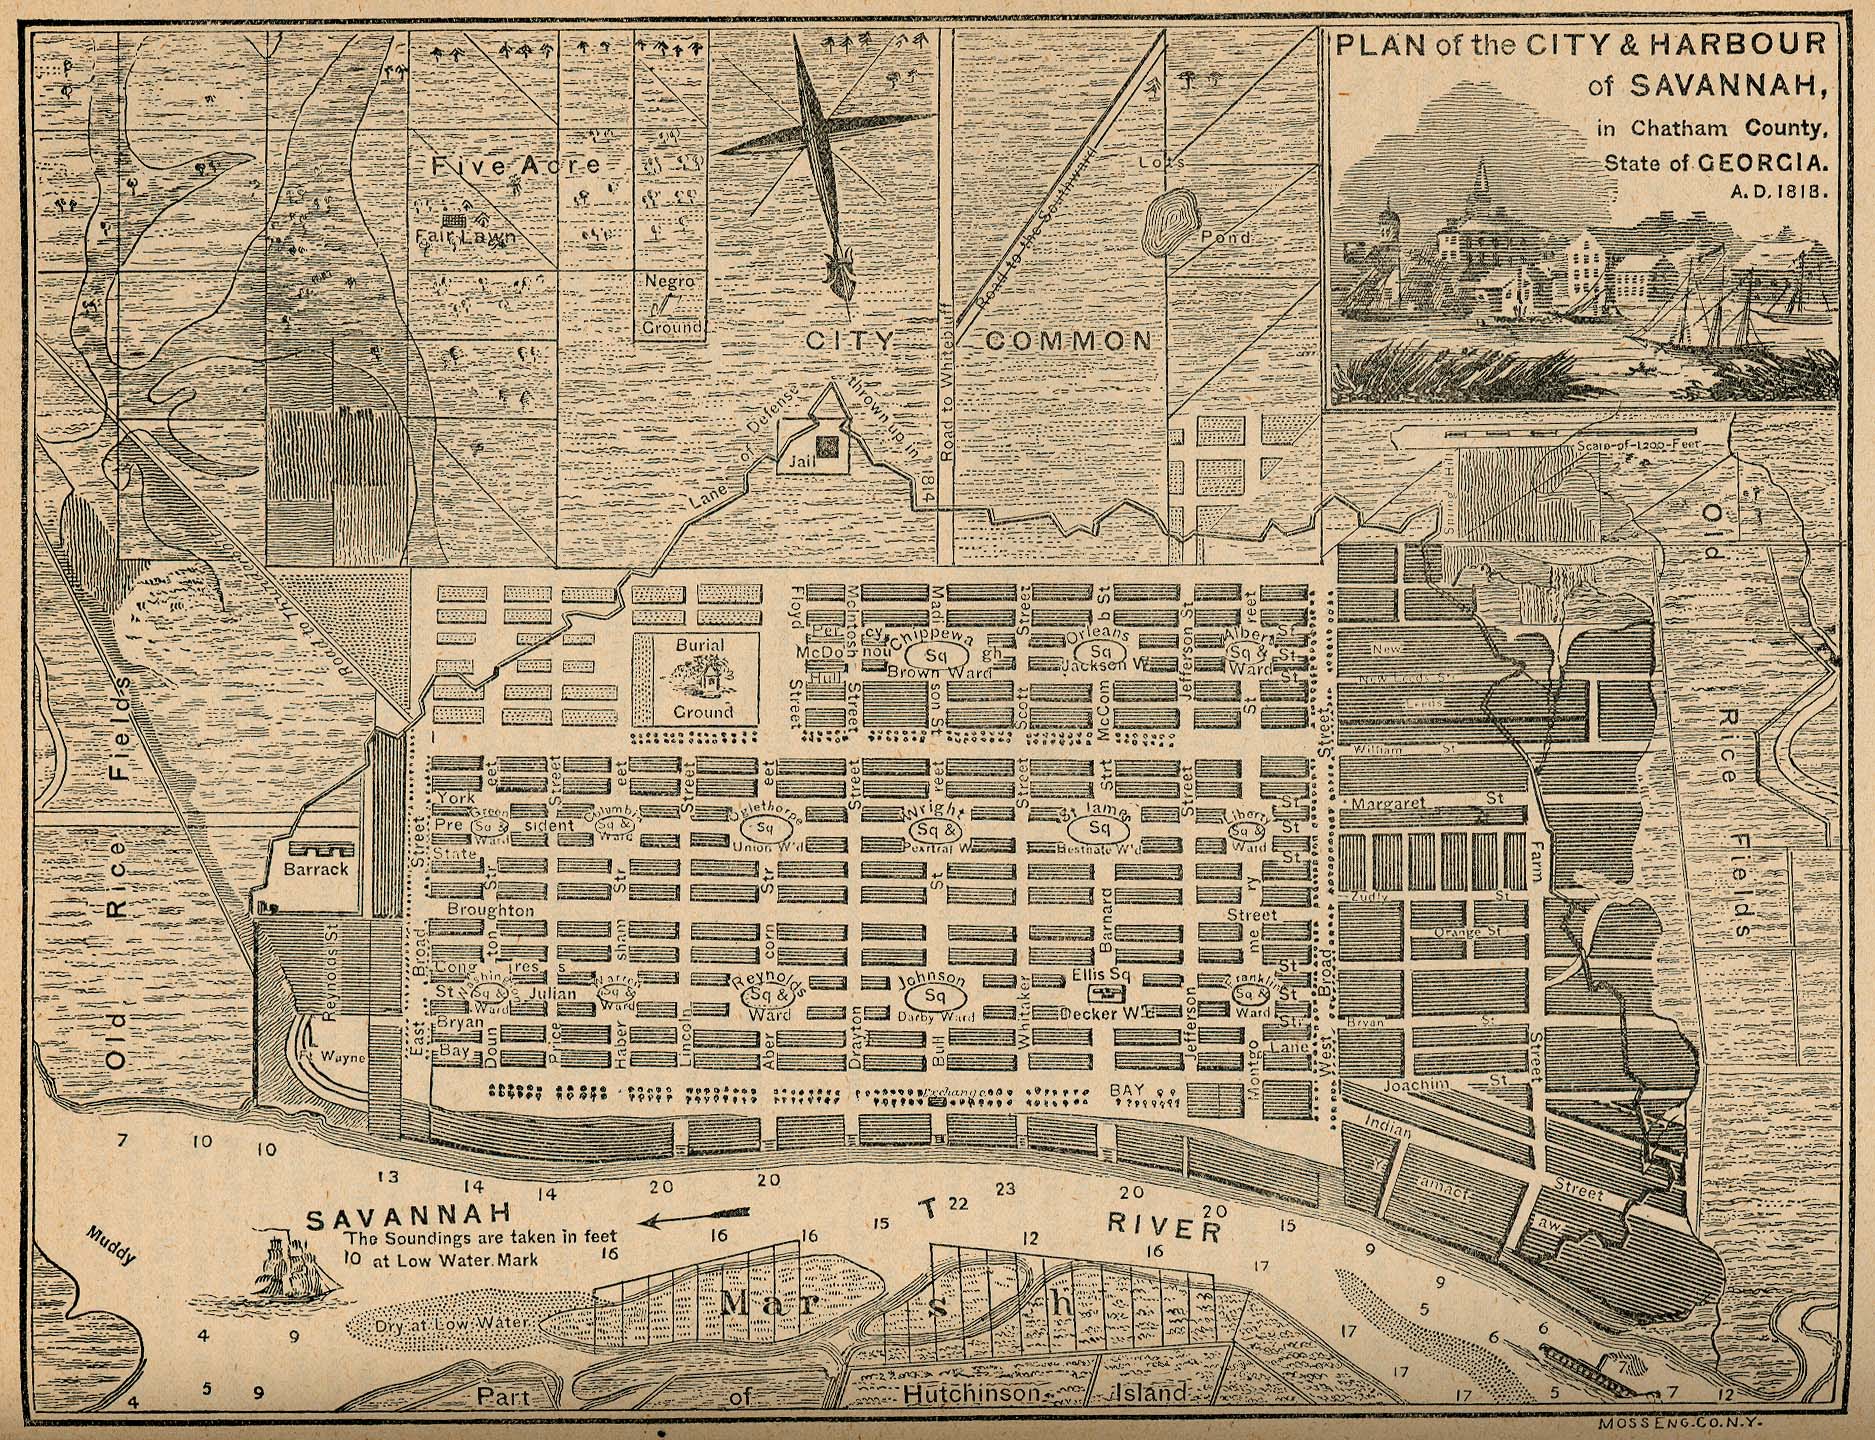 Savannah_cityplan_1818.jpg